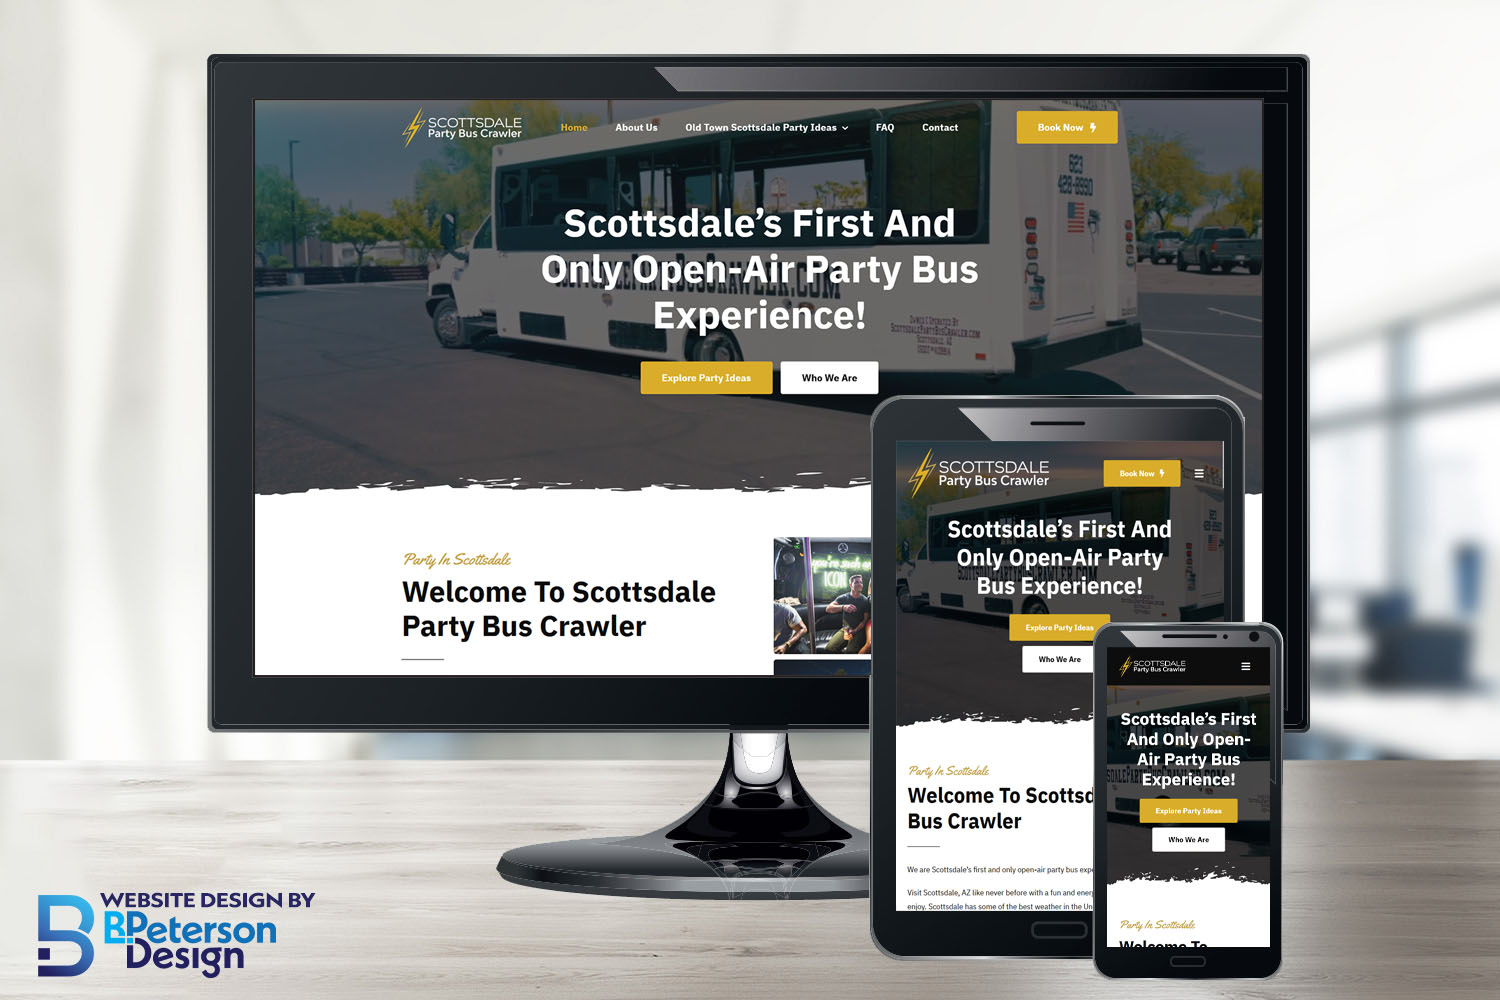 Scottsdale Party Bus Crawler's website displayed on responsive platforms